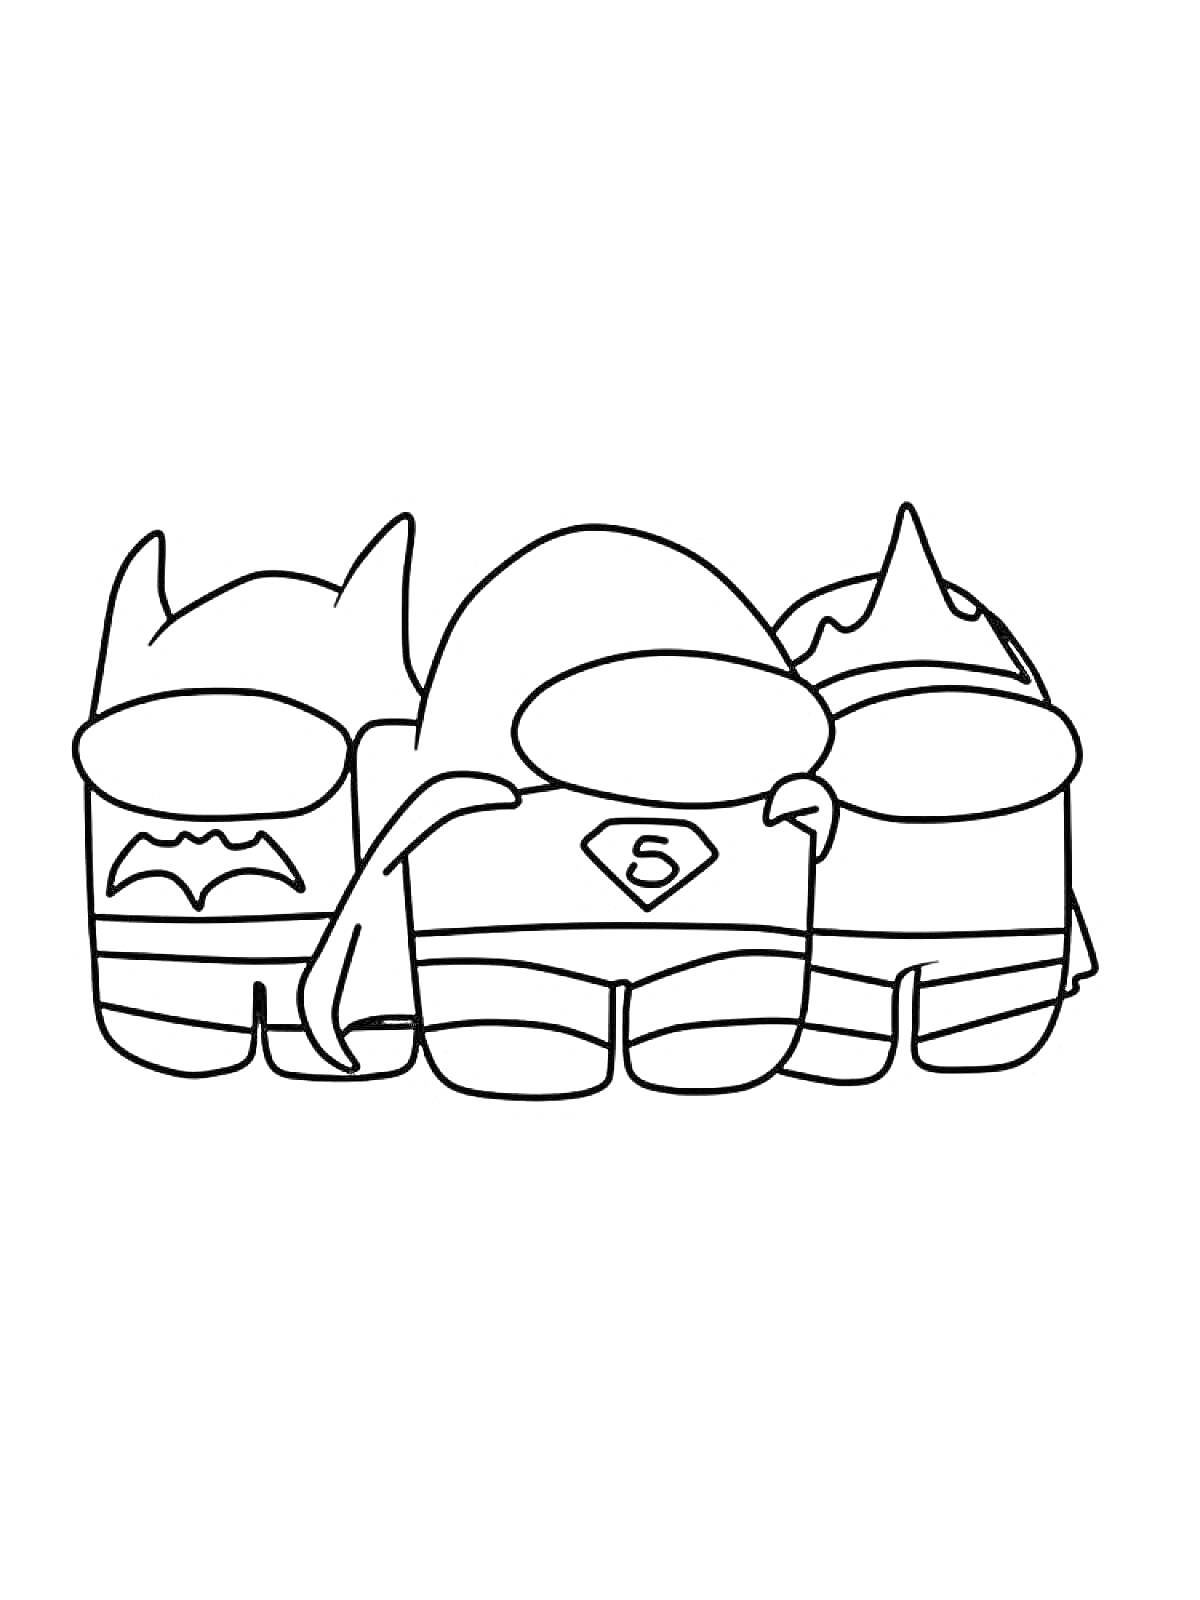 Раскраска Три персонажа Амонг Ас в костюмах супергероев (Бэтмен, Супермен, Чудо-женщина)